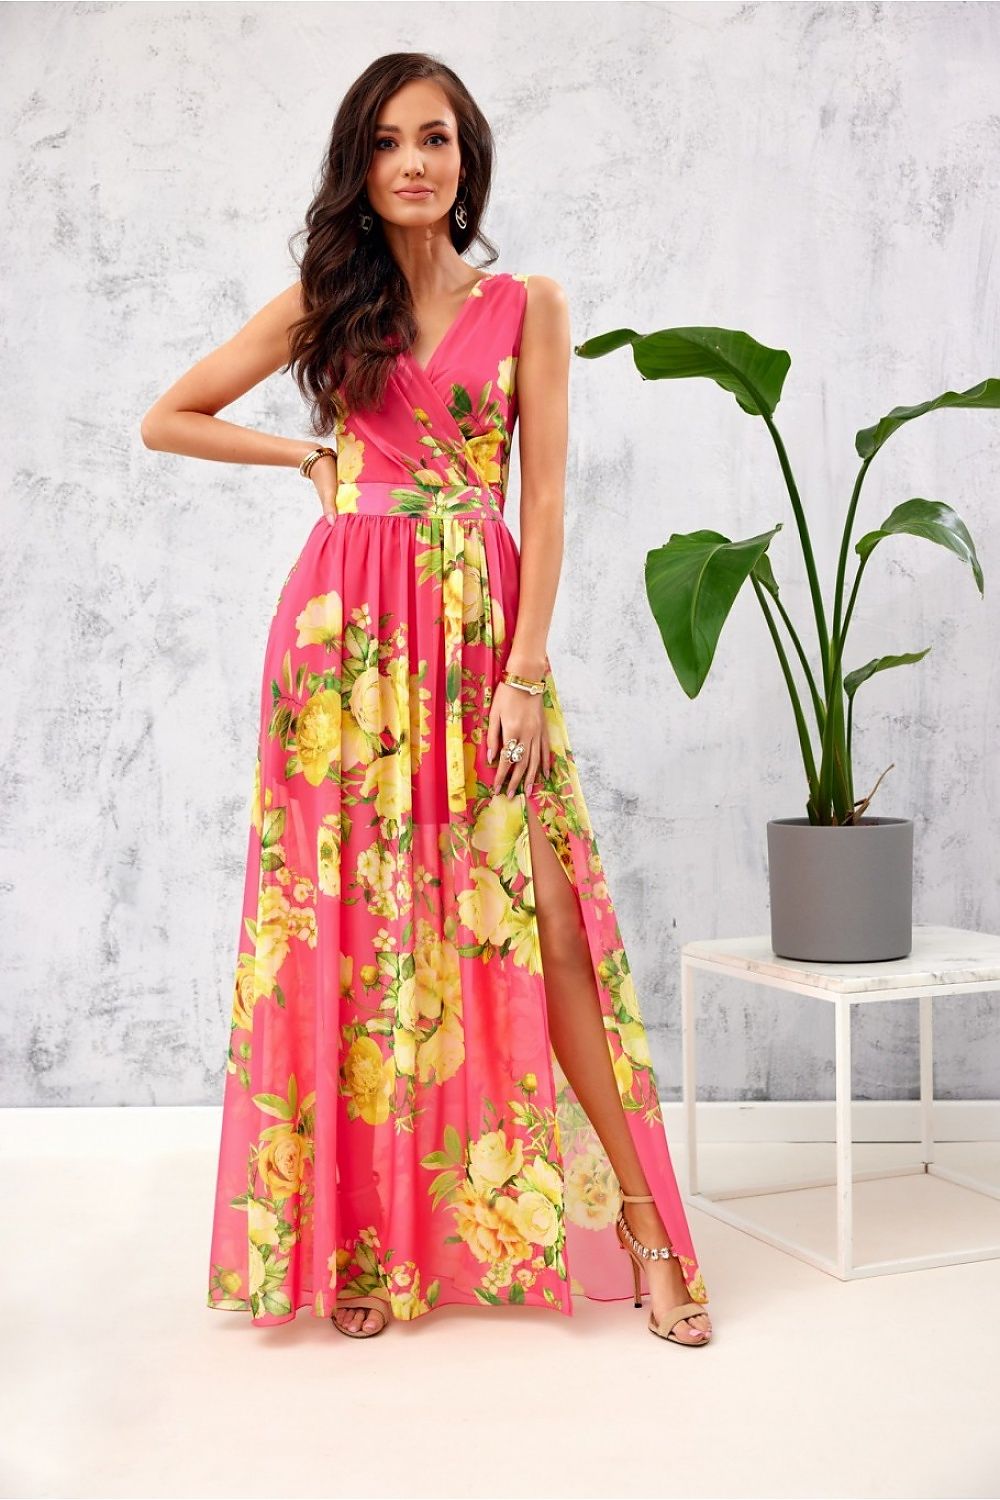 Fashionista Pink Floral Chiffon Dress